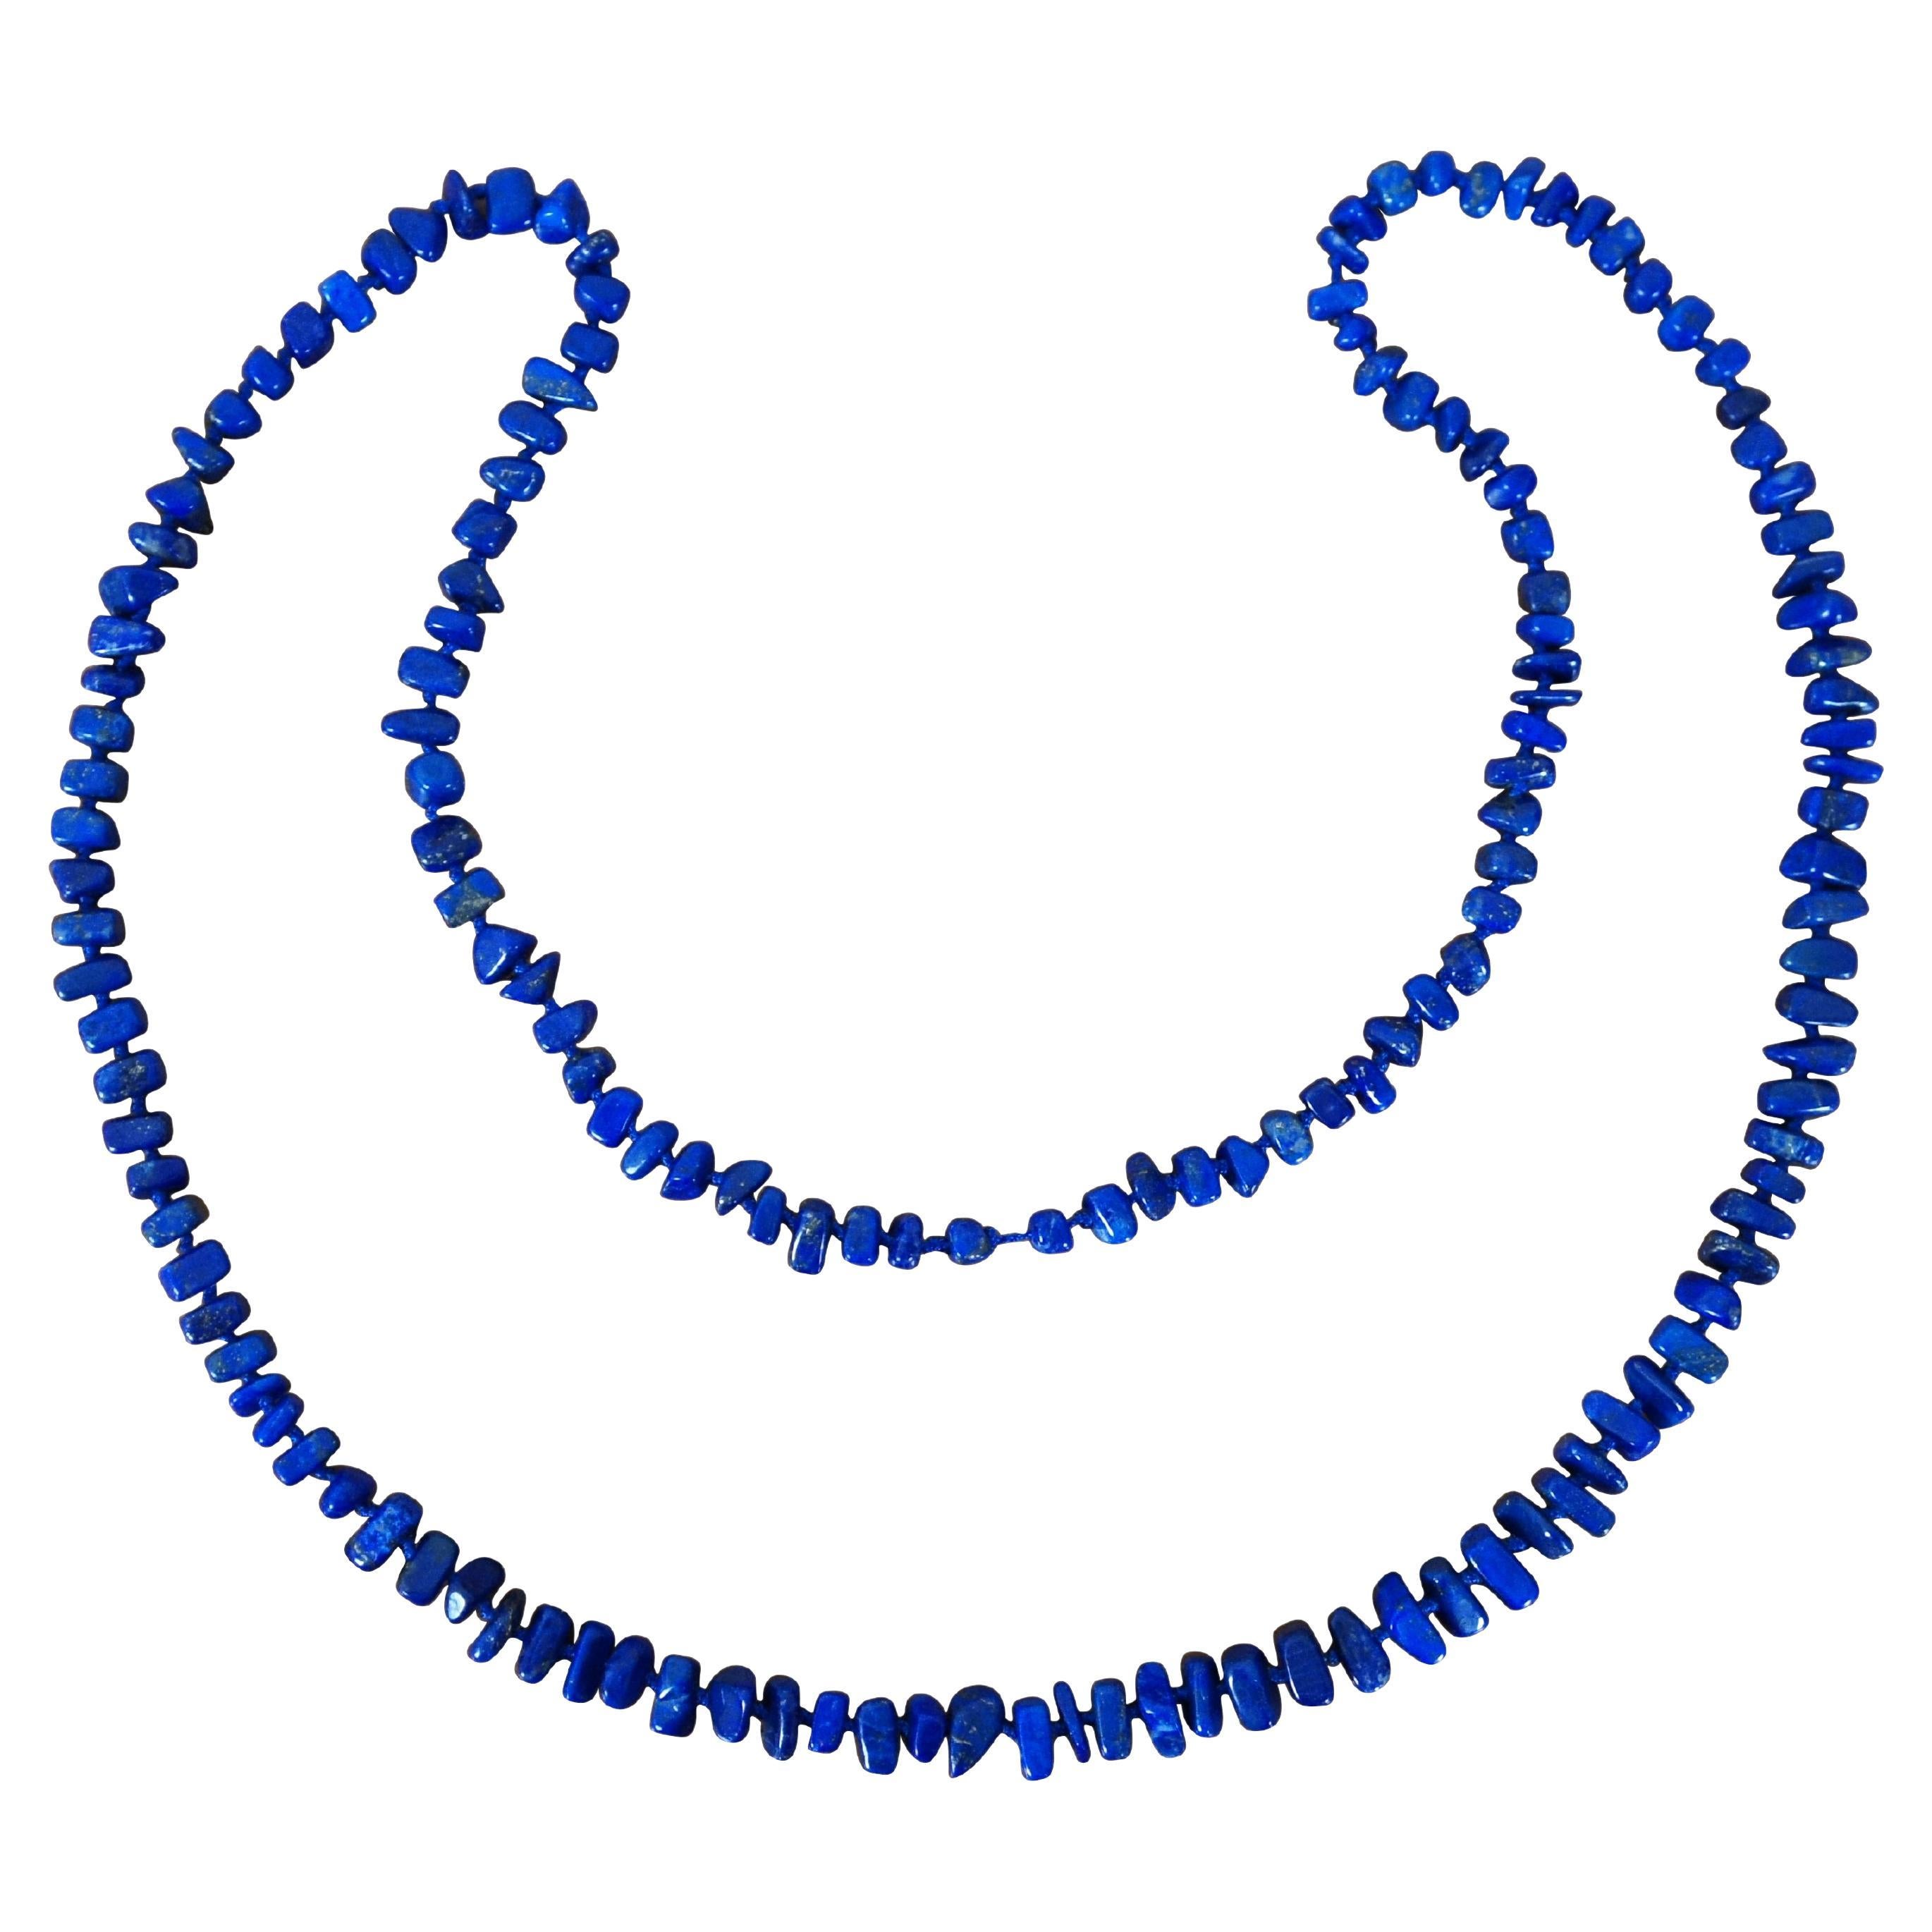 Vintage Lapis Lazuli Blue Beaded Stone Nugget Strand Necklace 33”